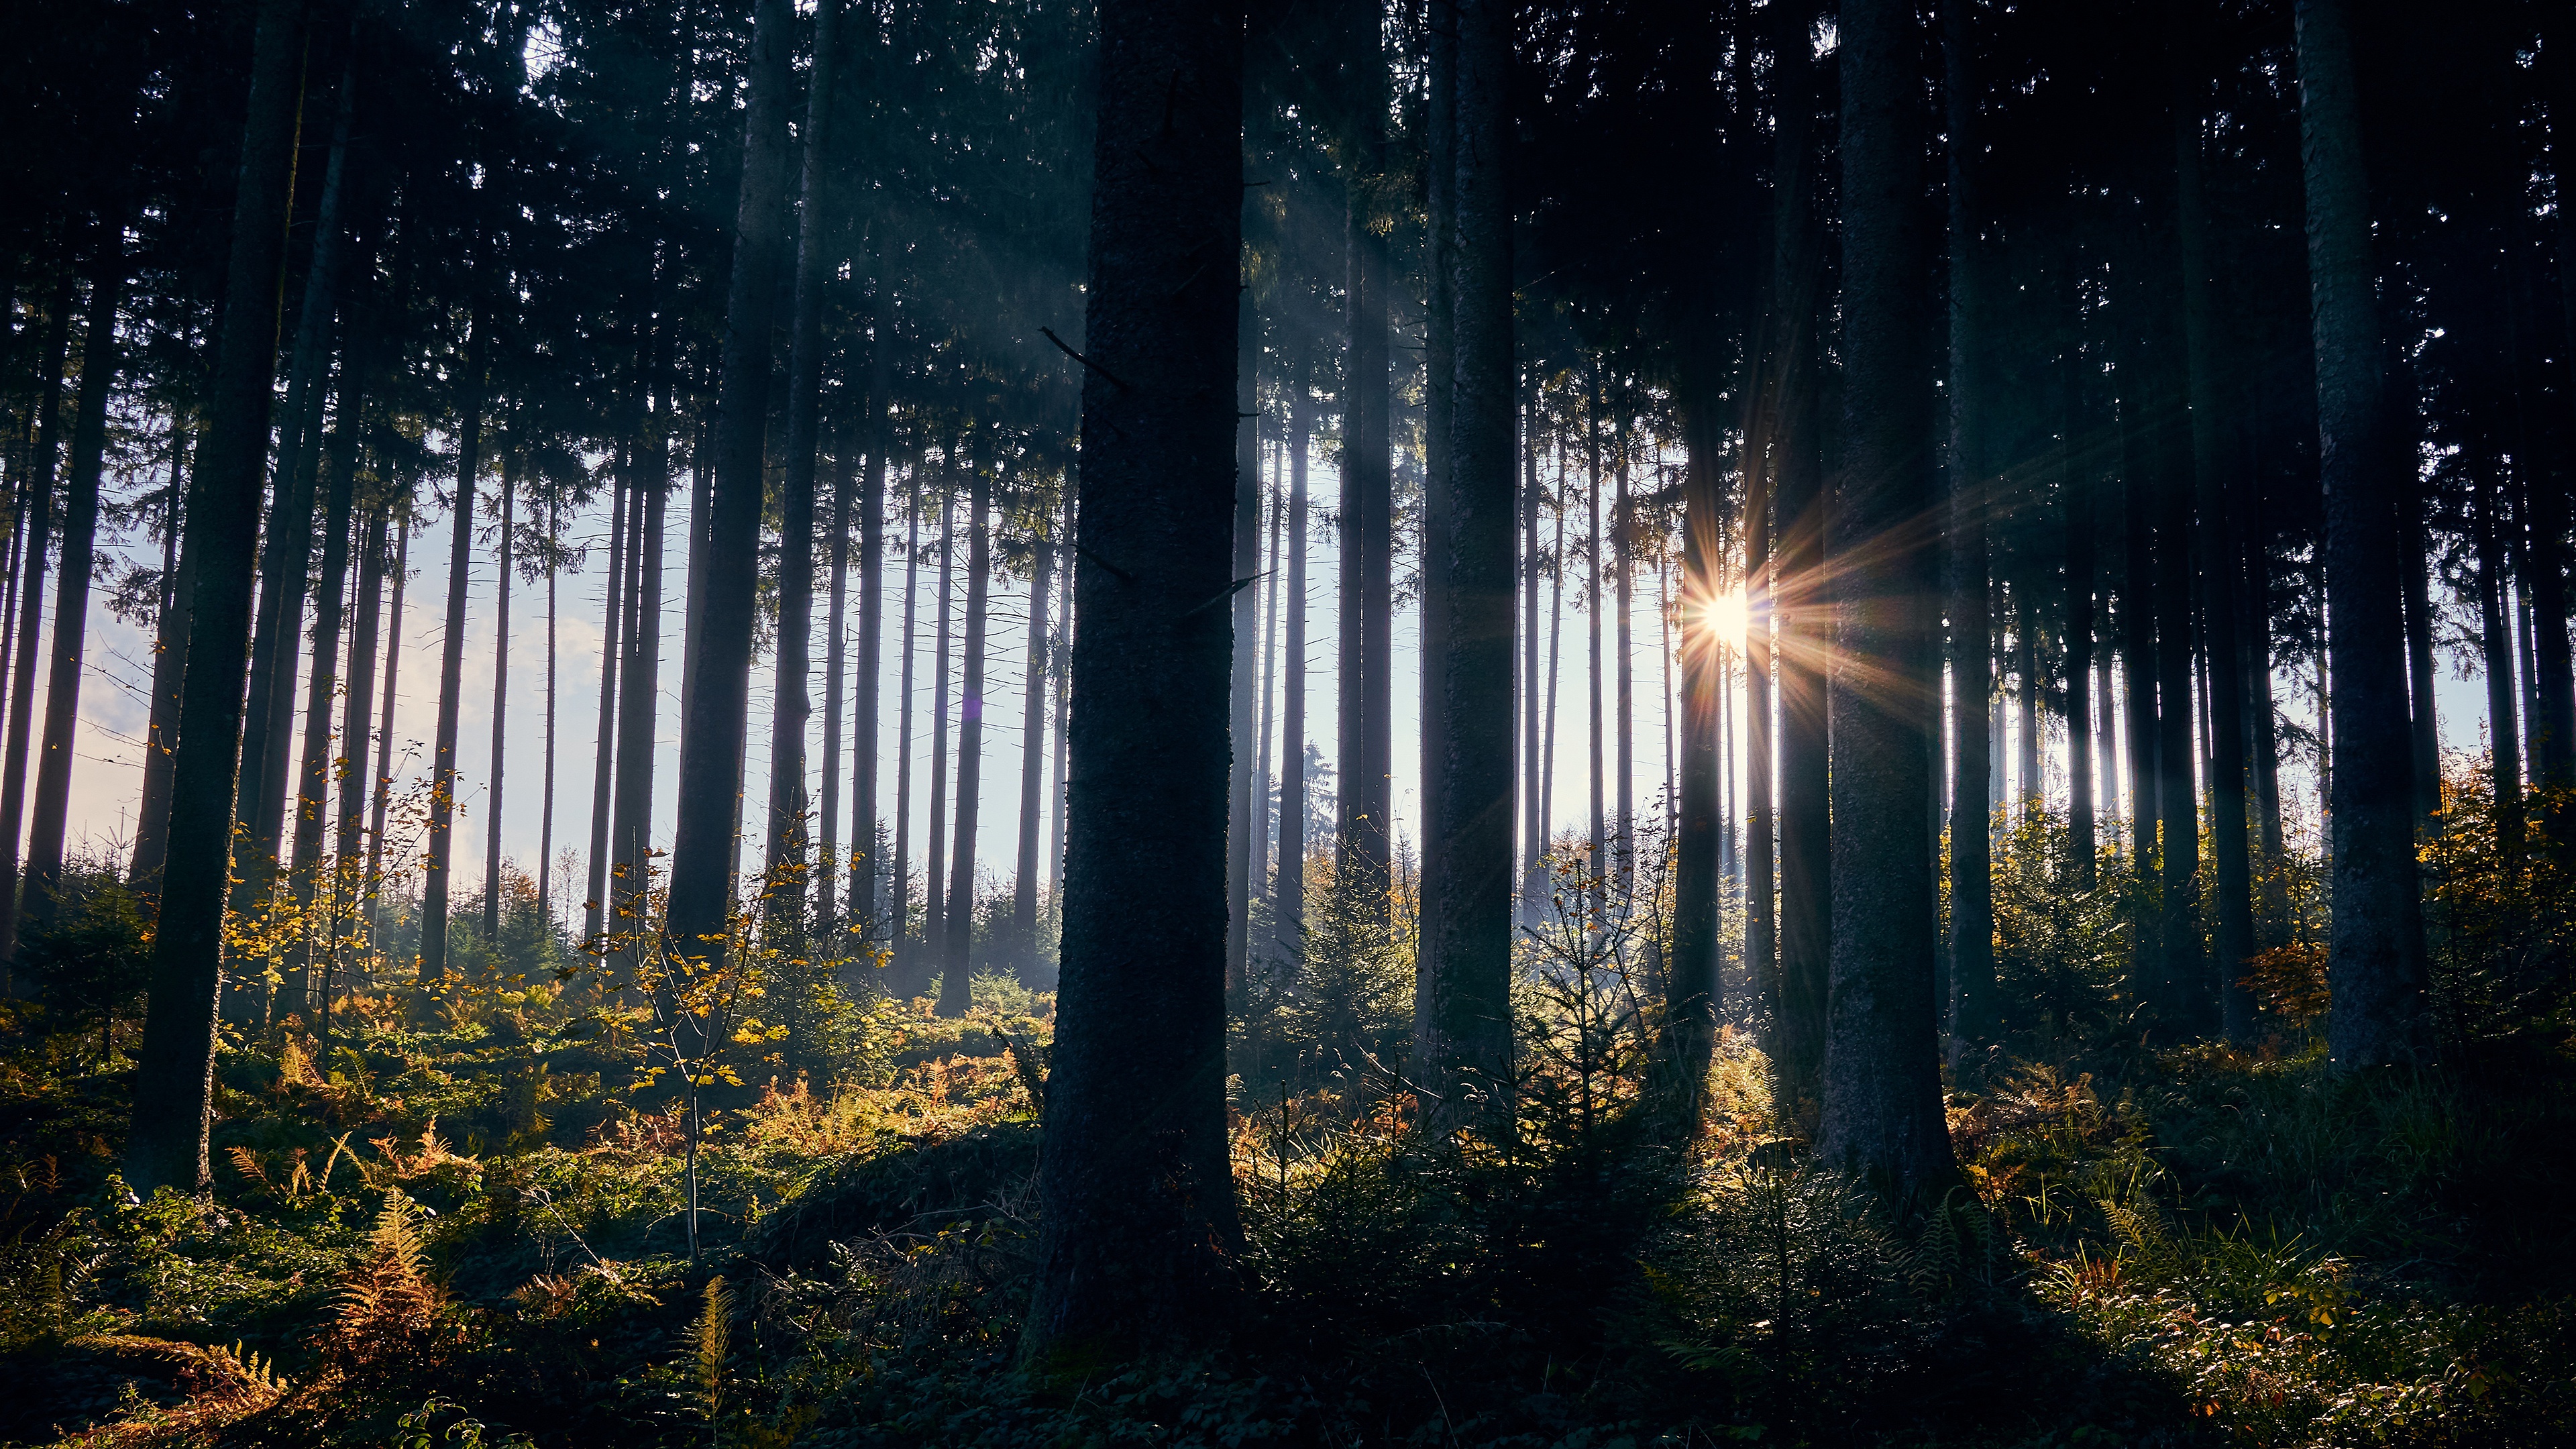 Лес солнце и звезды. Ночной лес фото. Лучи солнца. Свет падает в лесу.